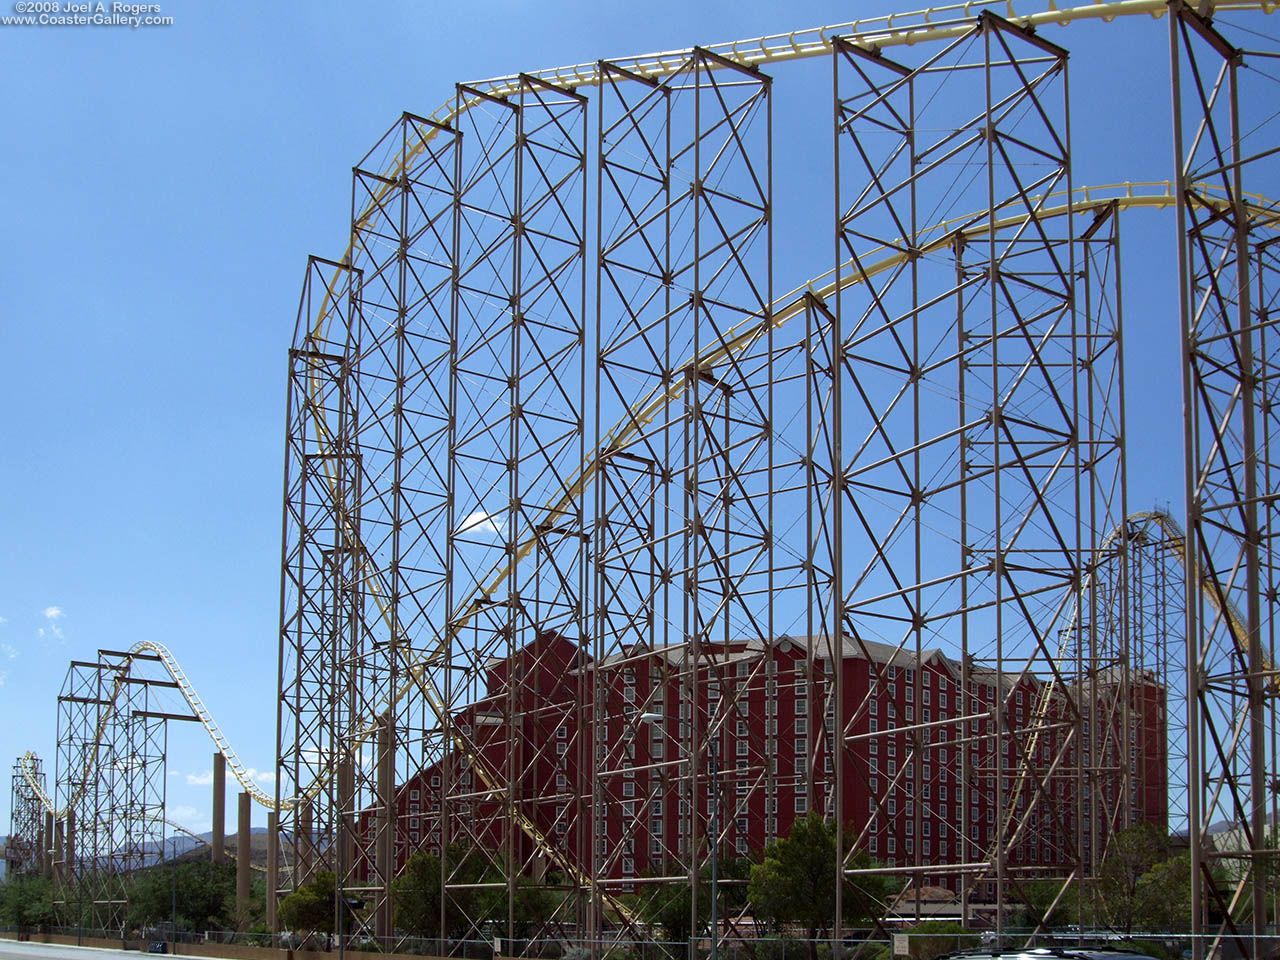 Massive roller coaster structure